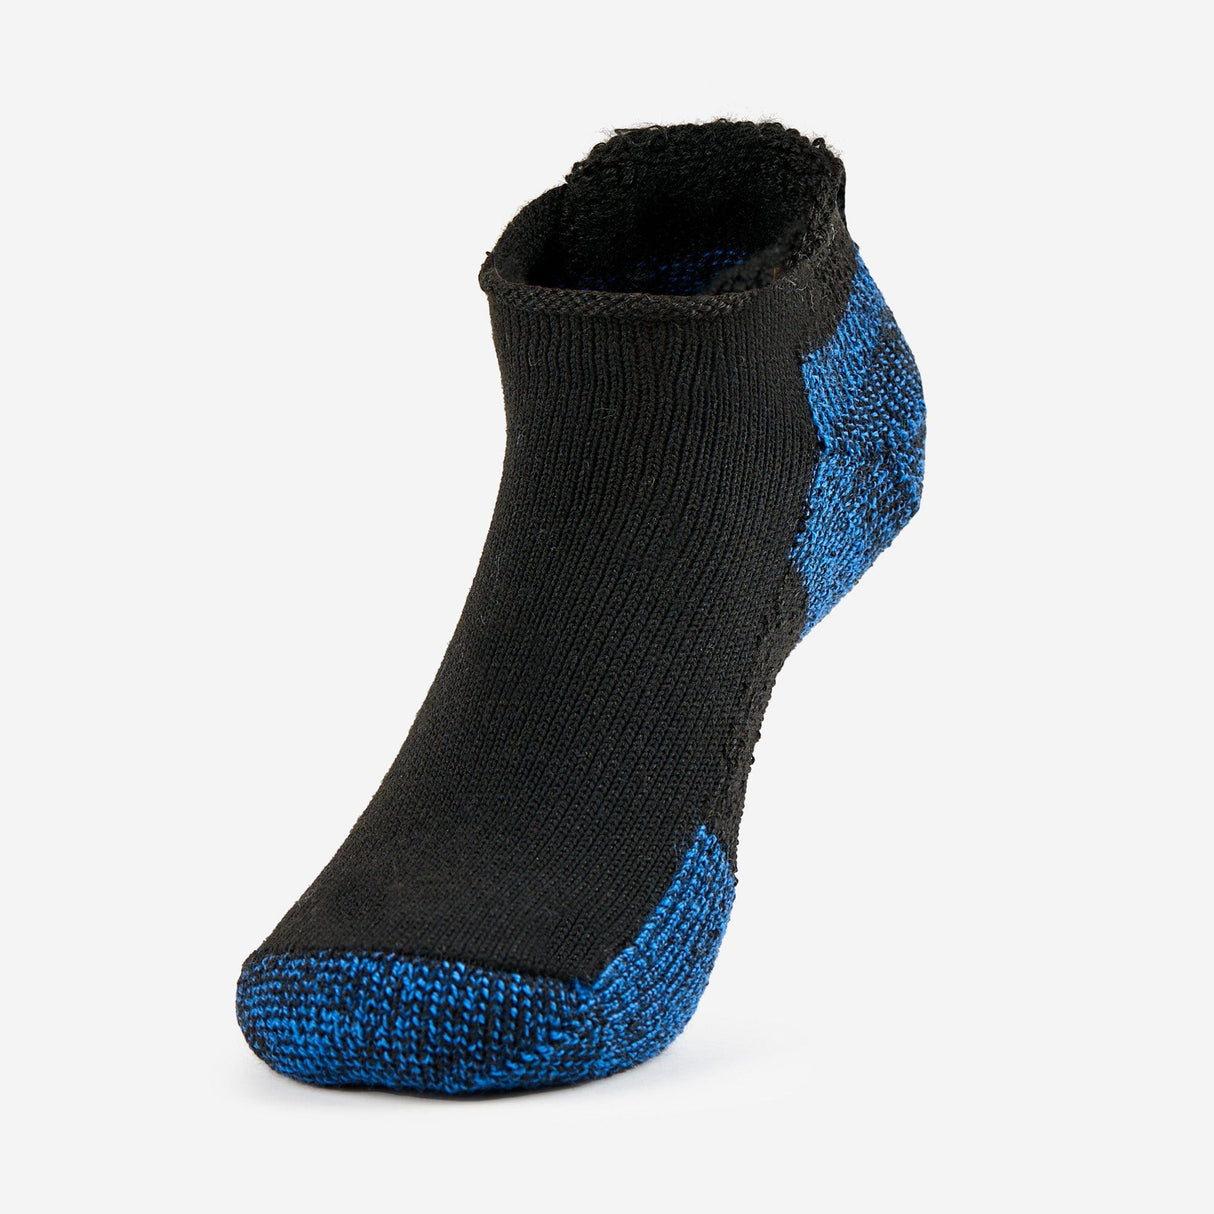 Thorlo Running Maximum Cushion Rolltop Socks  -  Large / Black/Blue / Single Pair